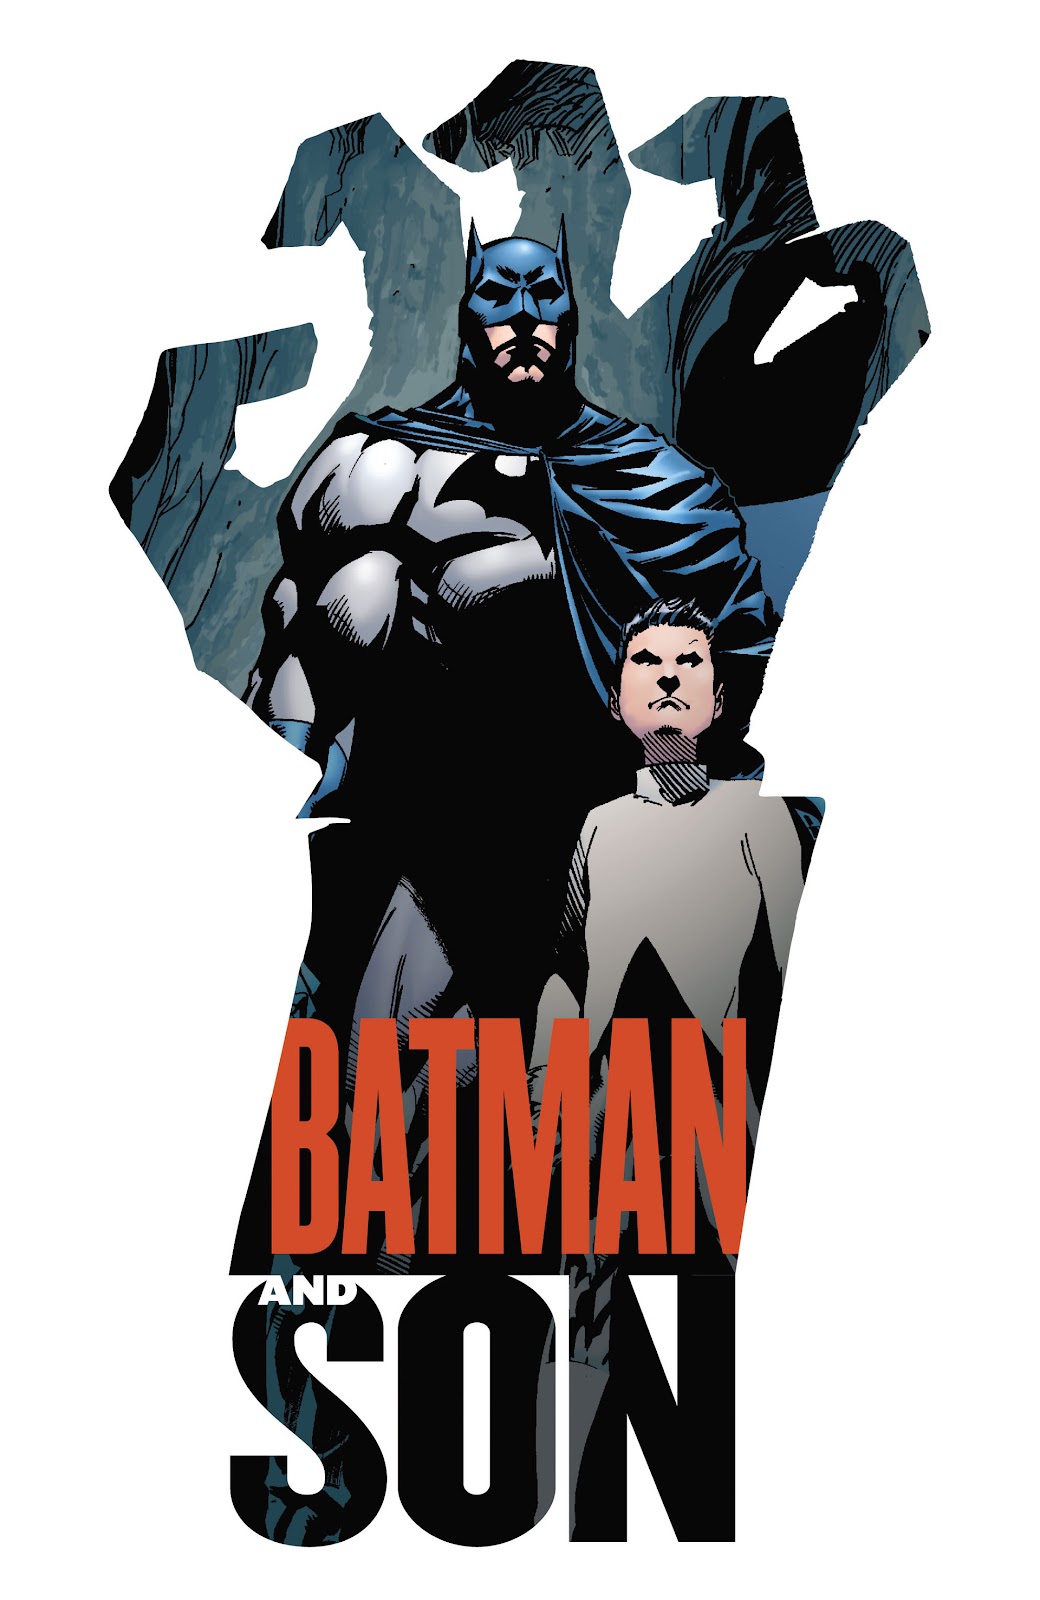 Batman Batman And Son | Read Batman Batman And Son comic online in high  quality. Read Full Comic online for free - Read comics online in high  quality .|viewcomiconline.com